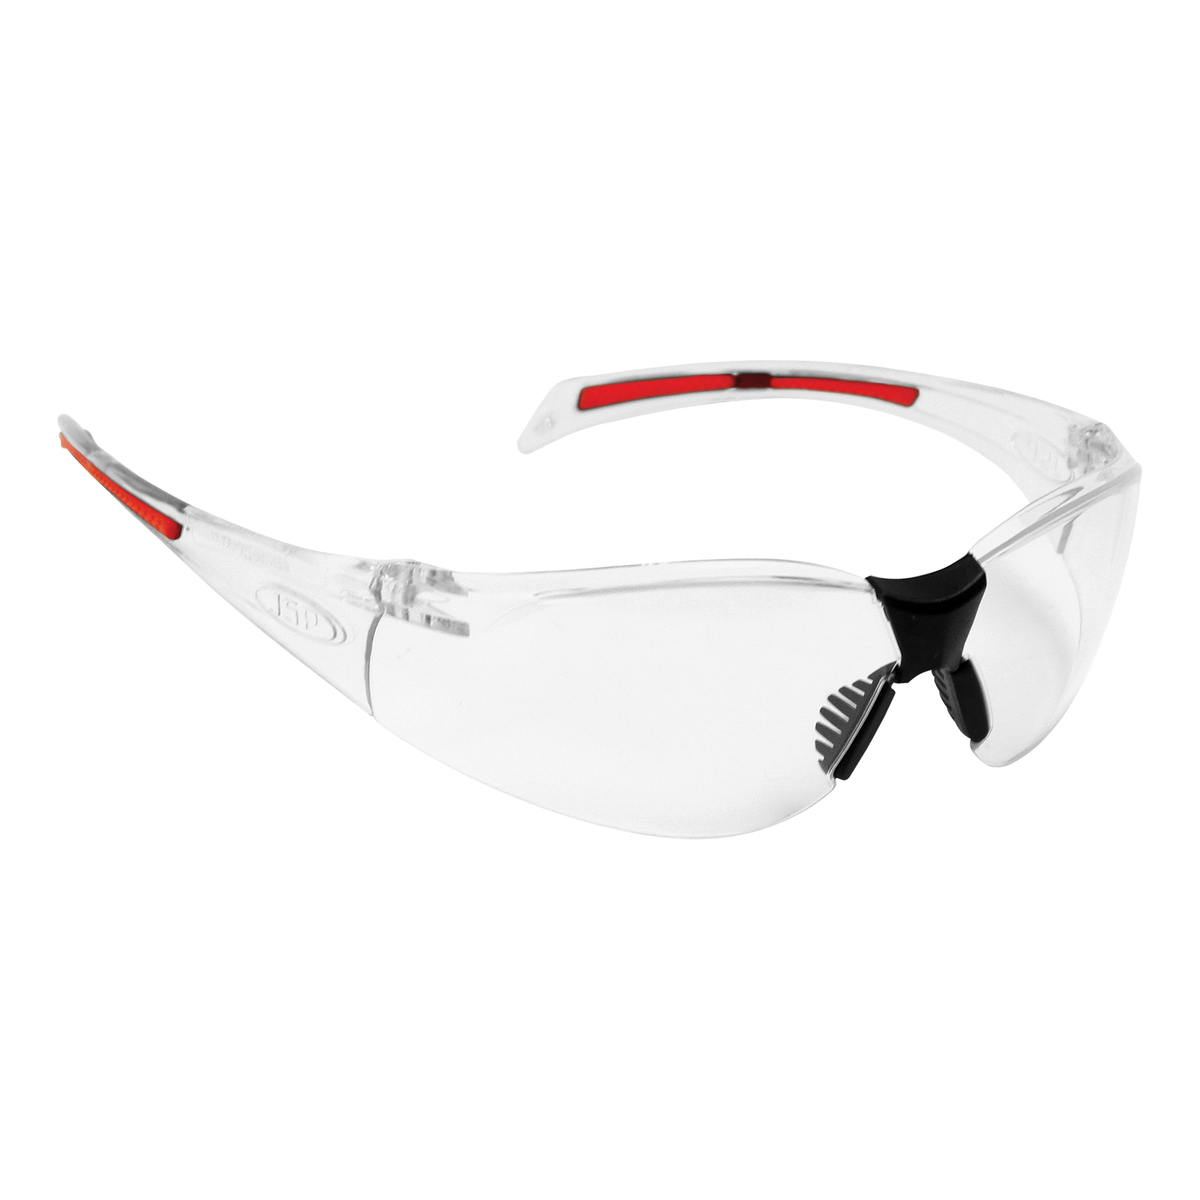 Jsp Stealth 8000 Clear Safety Specs Clear Red Mistresist Clear Order Uniform Uk Ltd